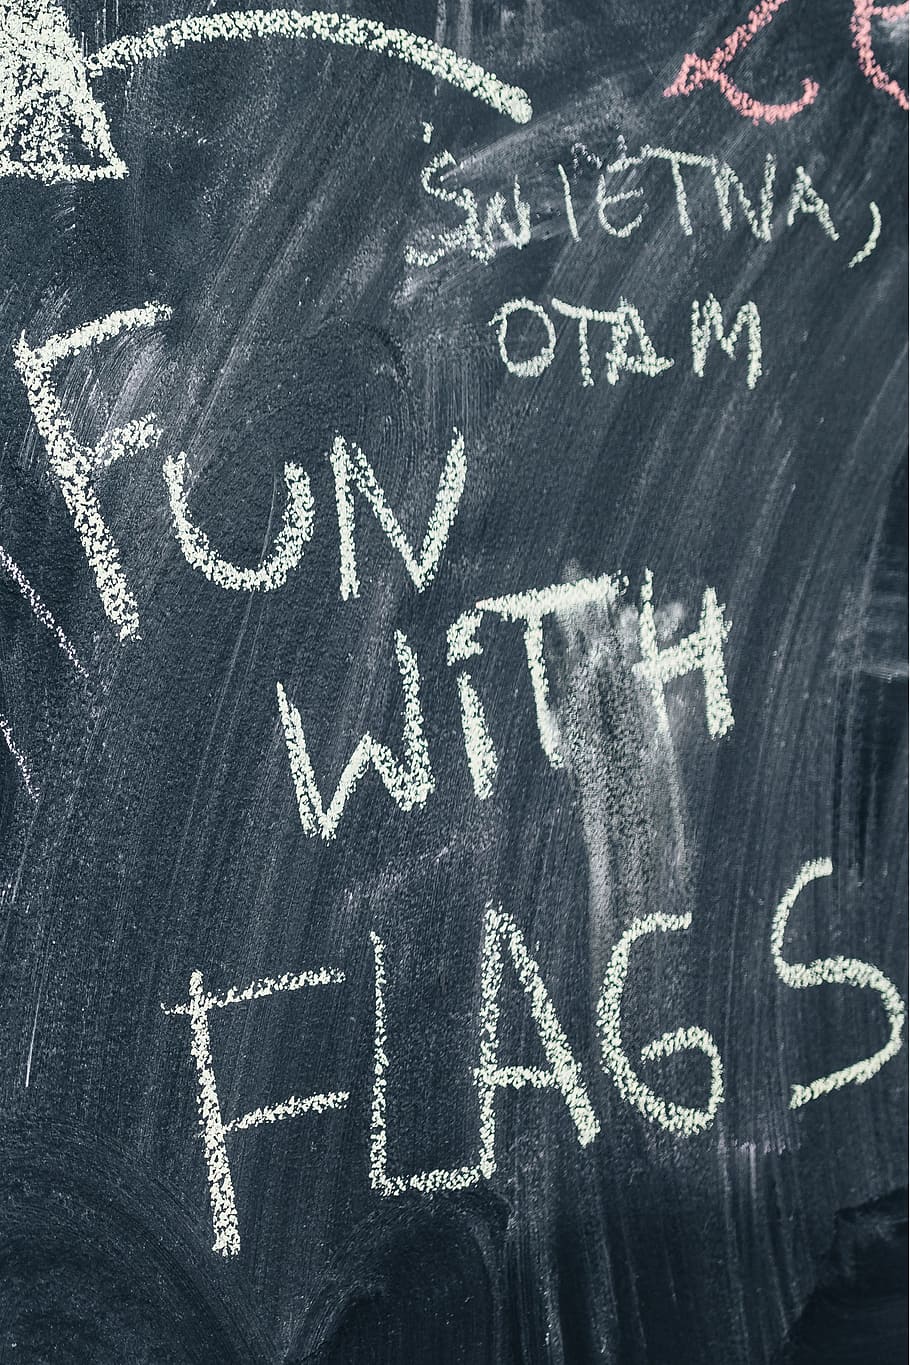 chalkboard, handwritten, words, black, chalk, sign, fun with flags, text, communication, blackboard